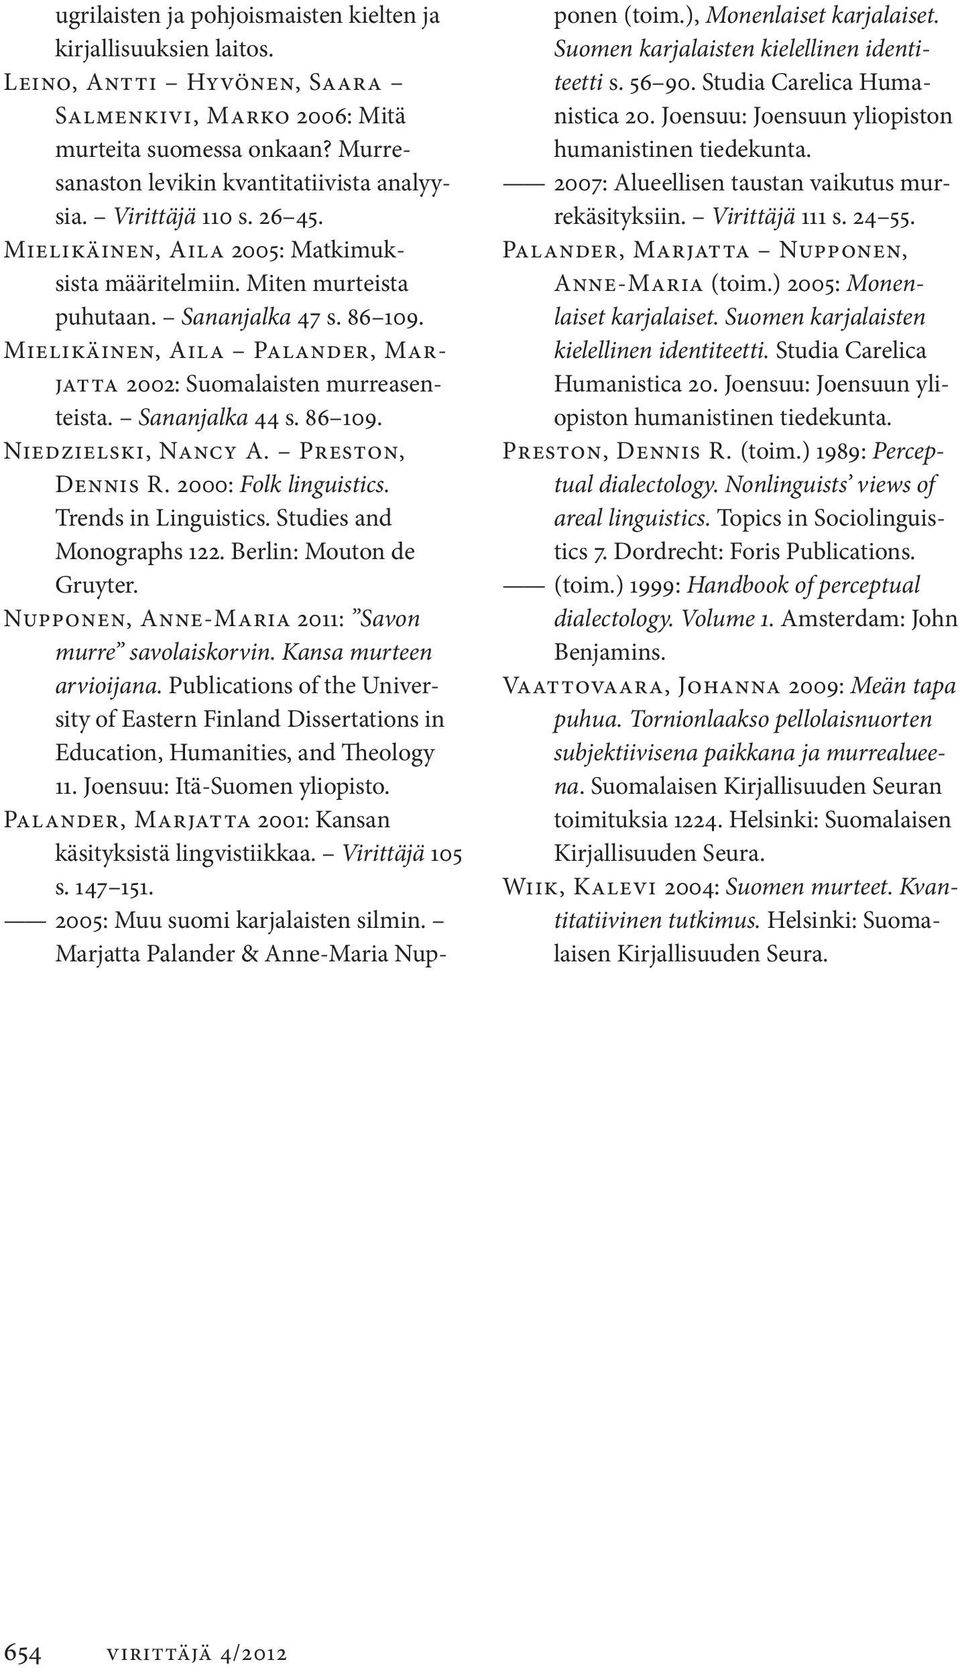 Sananjalka 44 s. 86 109. Niedzielski, Nancy A. Preston, Dennis R. 2000: Folk linguistics. Trends in Linguistics. Studies and Monographs 122. Berlin: Mouton de Gruyter.